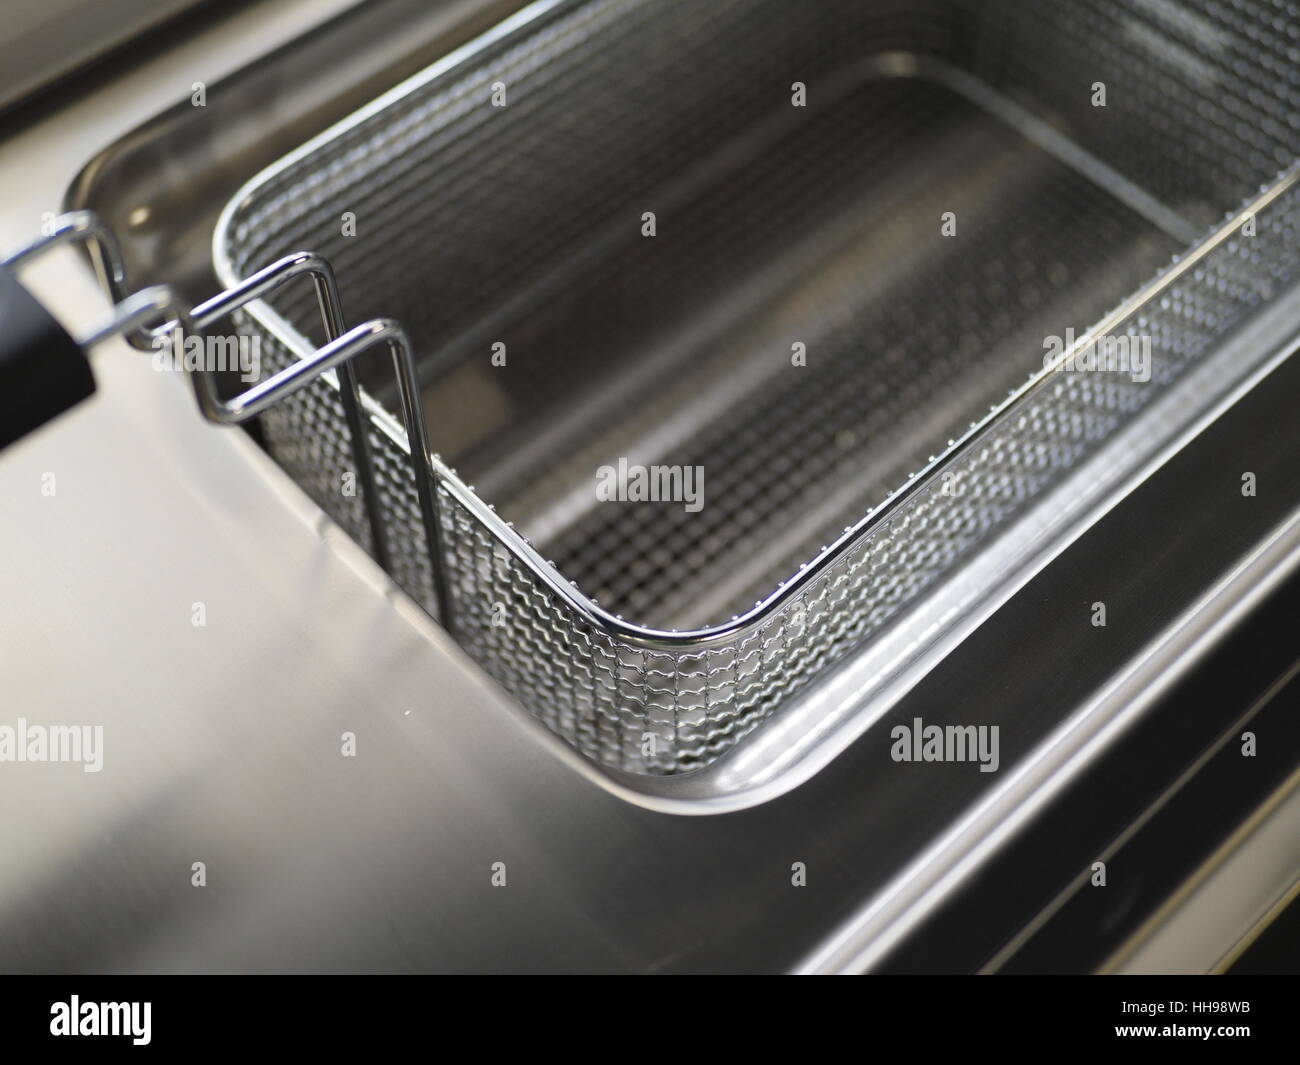 Industrial kitchen appliances for industrial kitchens; fryer detail Stock Photo